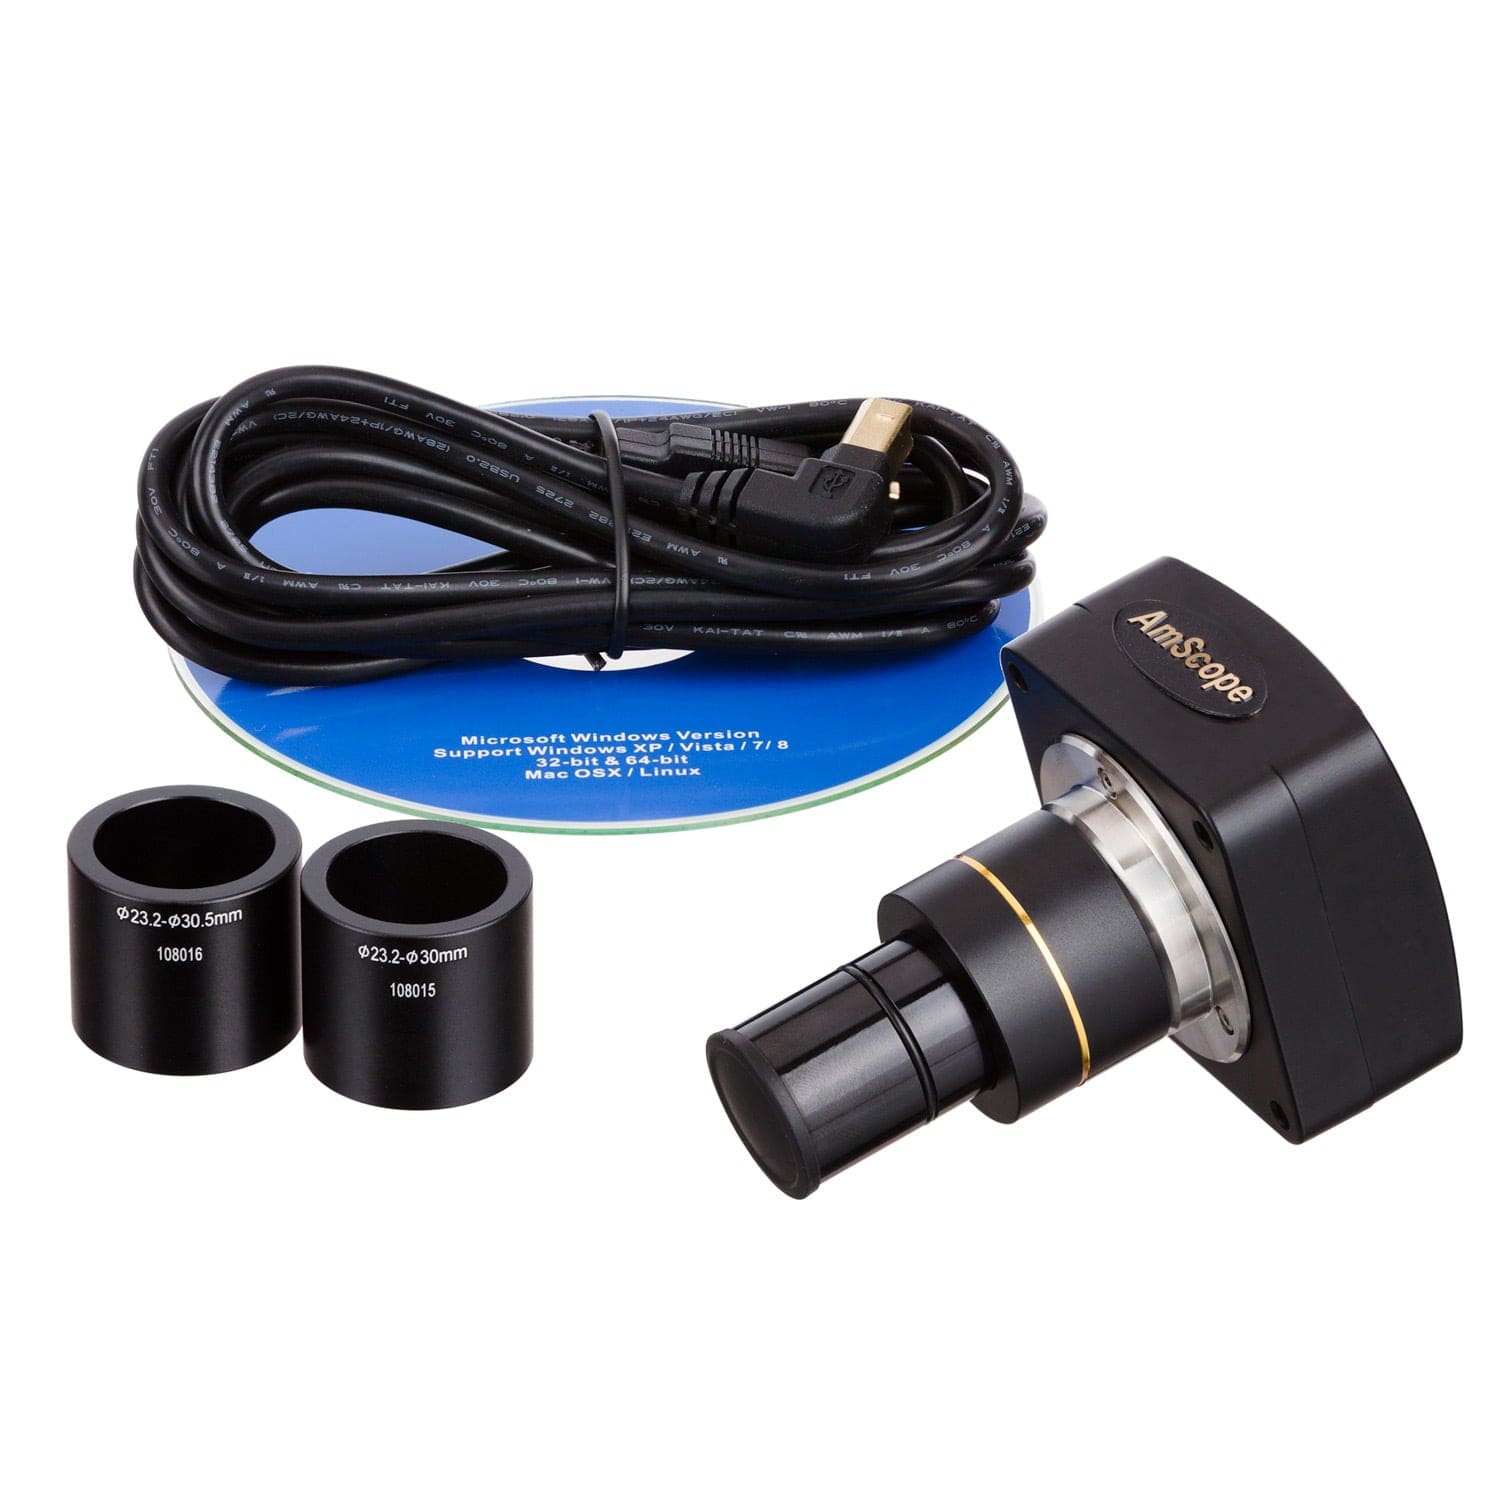 5MP USB Microscope Digital Camera Measurement Software AmScope